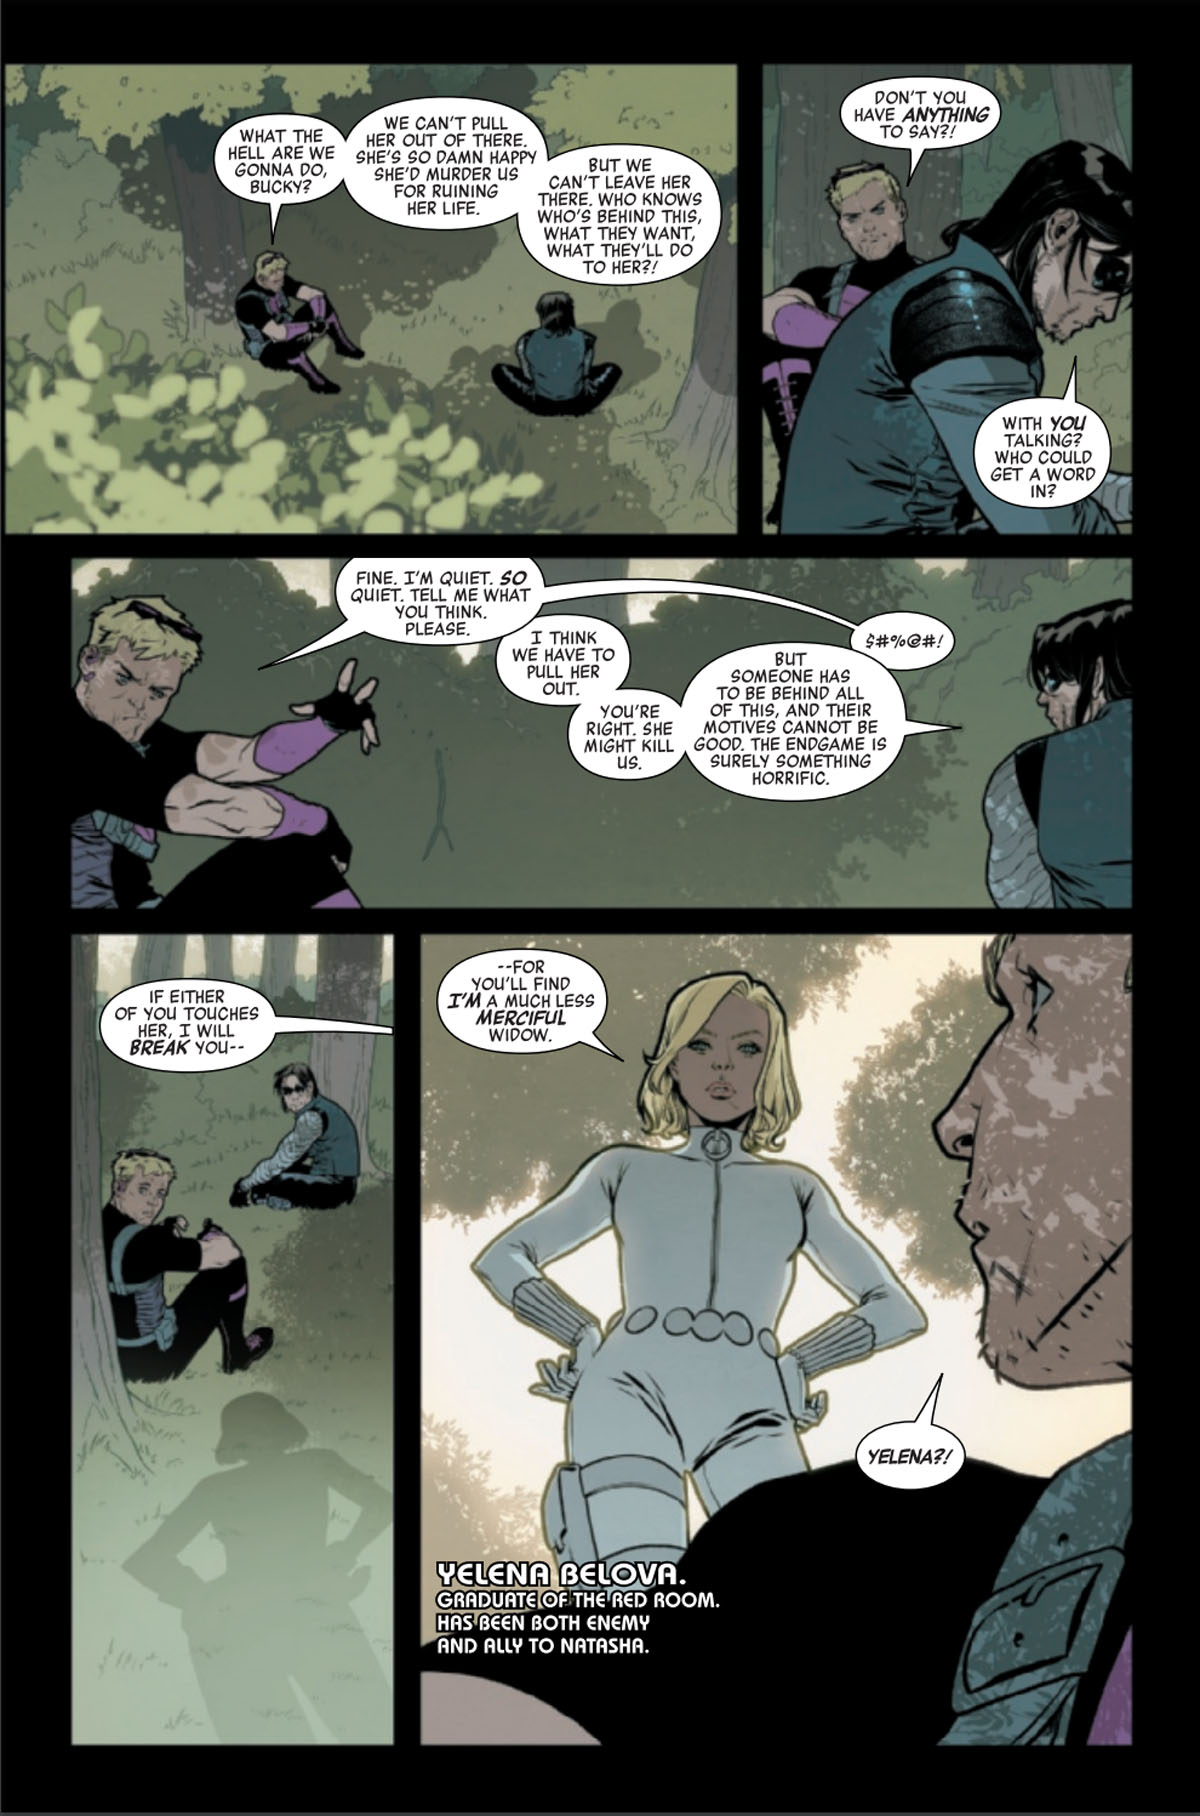 Black Widow #3 page 1